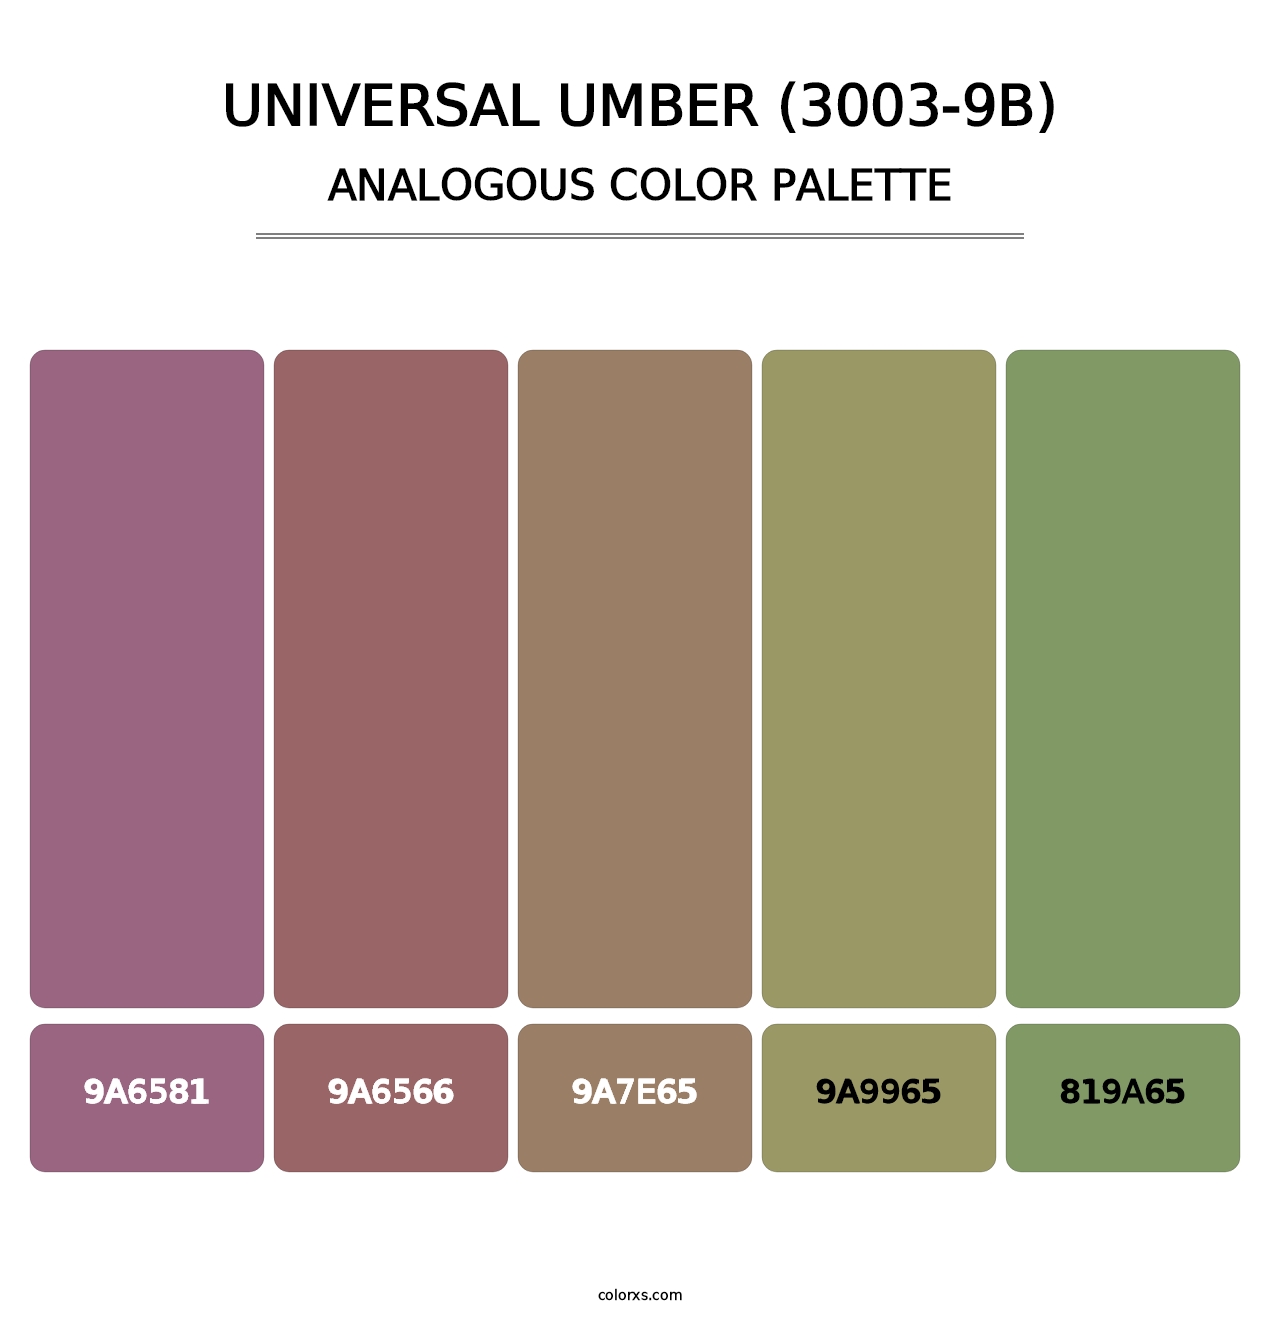 Universal Umber (3003-9B) - Analogous Color Palette